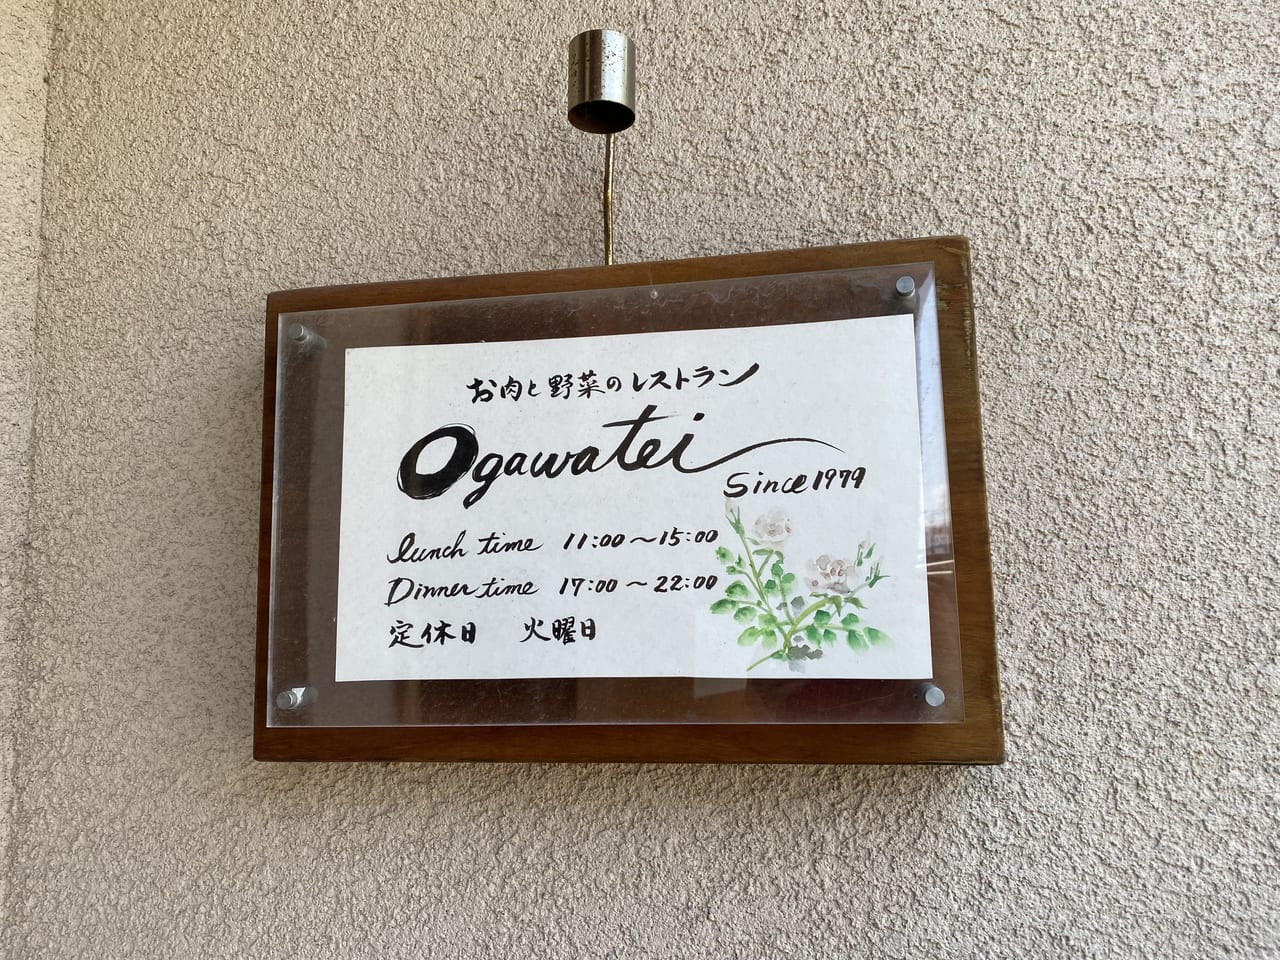 Ogawaretei